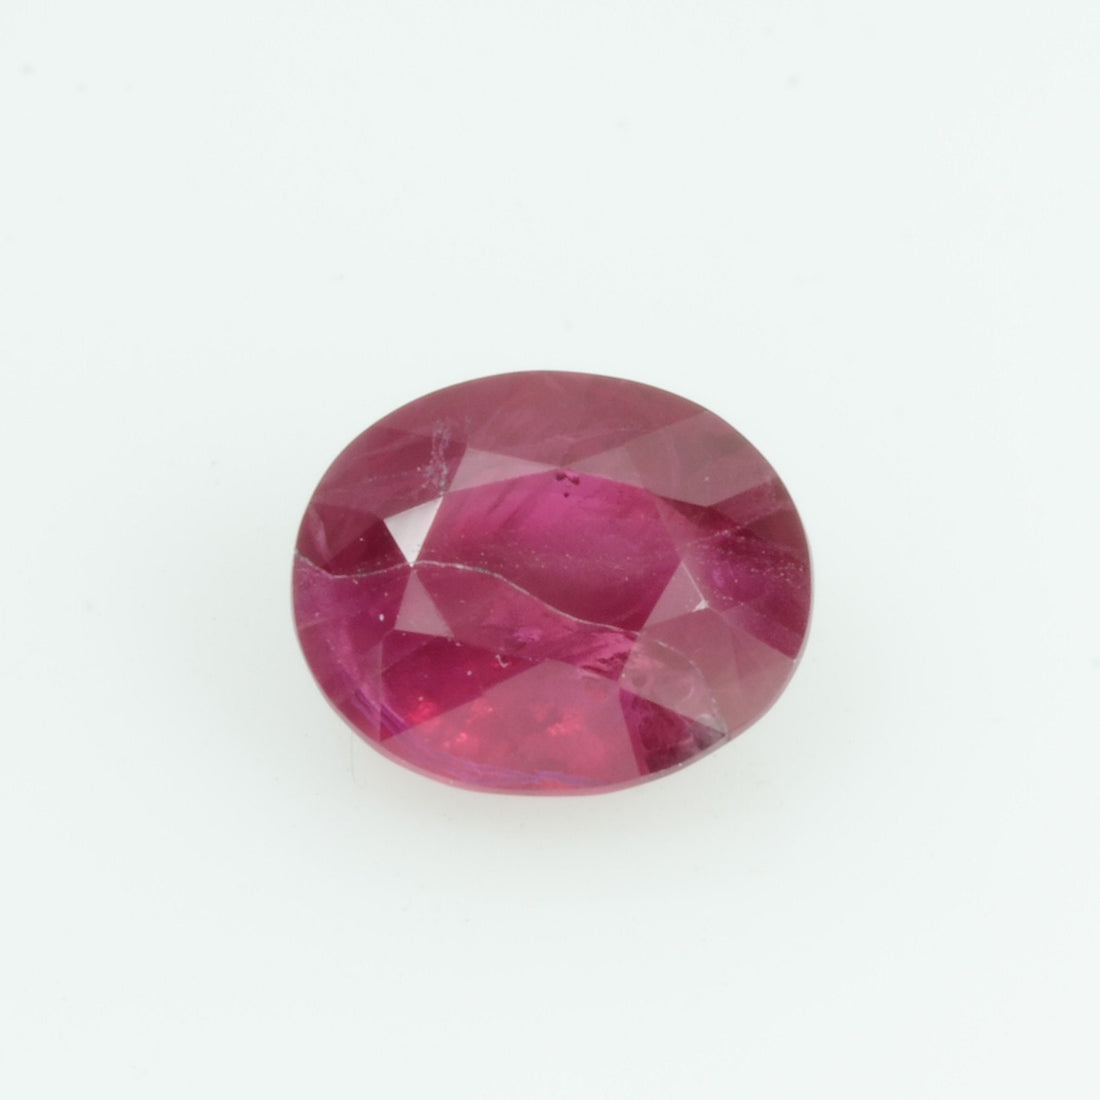 0.81 Cts Natural Burma Ruby Loose Gemstone Oval Cut